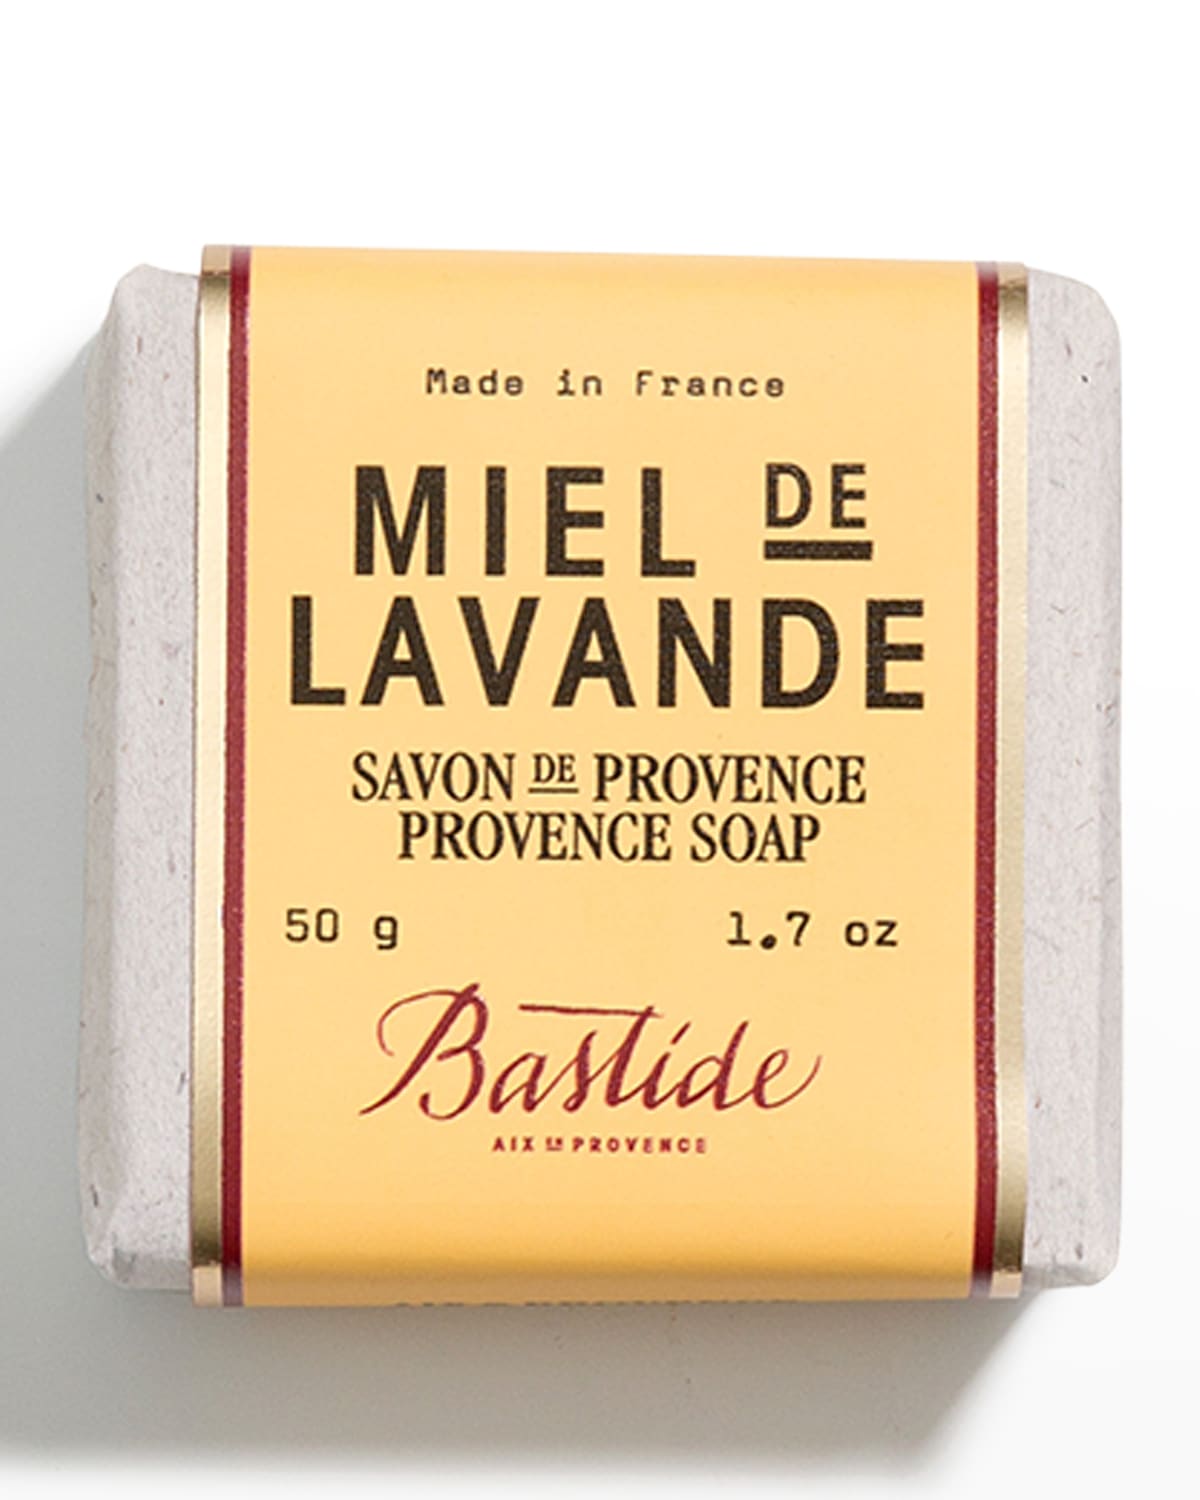 Bastide 1.7 oz. Miel de Lavande Artisanal Provence Soap